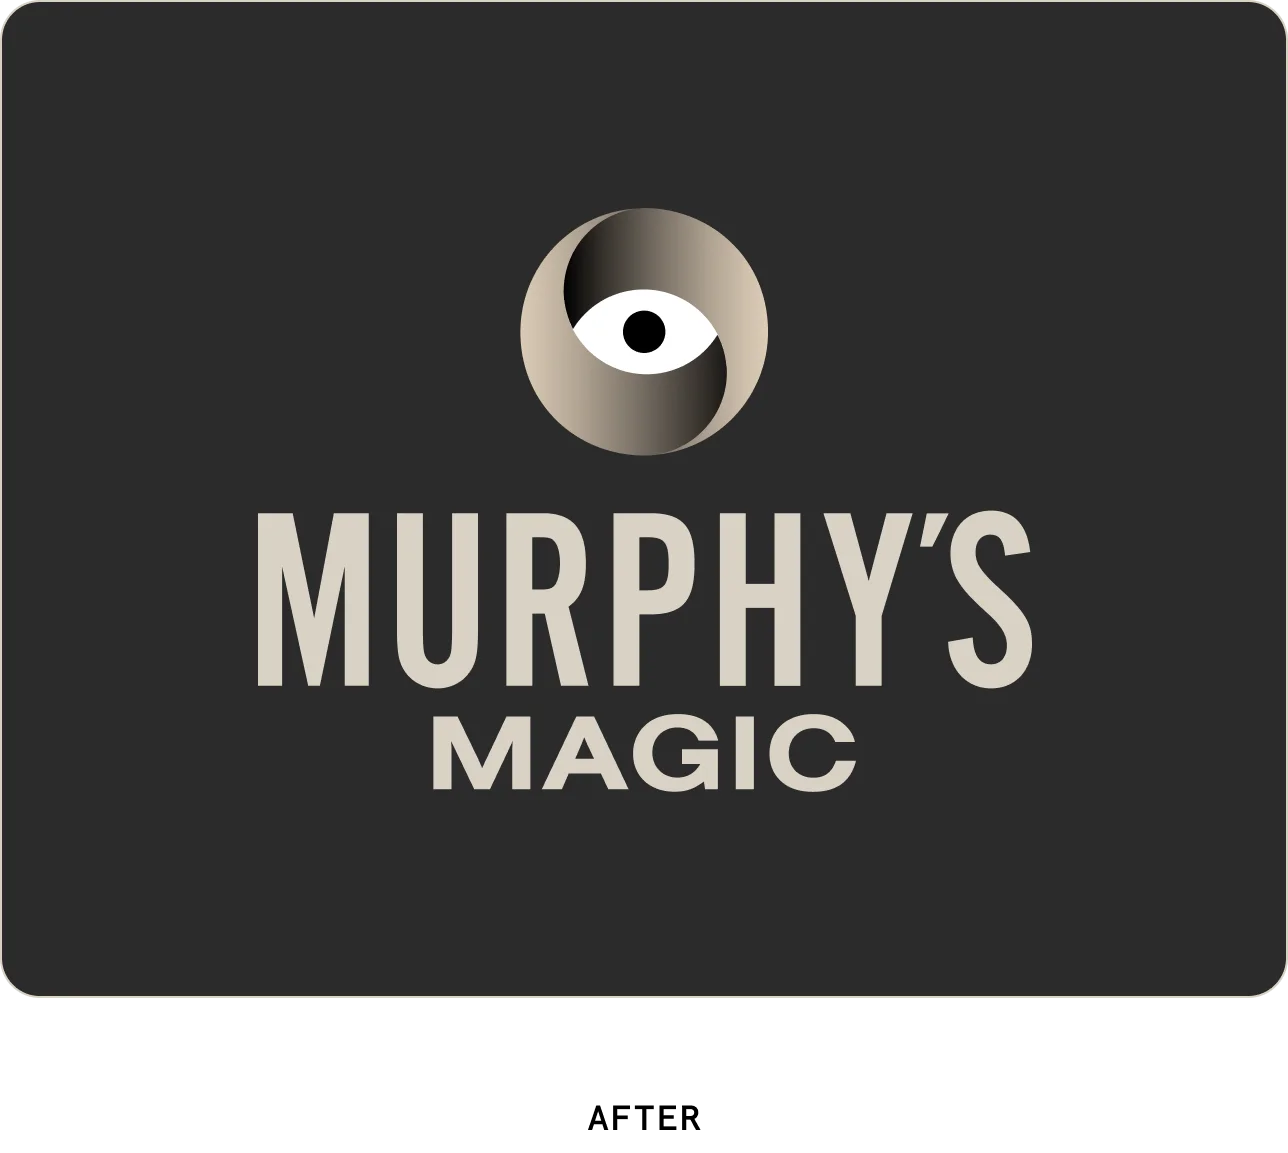 New Murphy's Magic logo